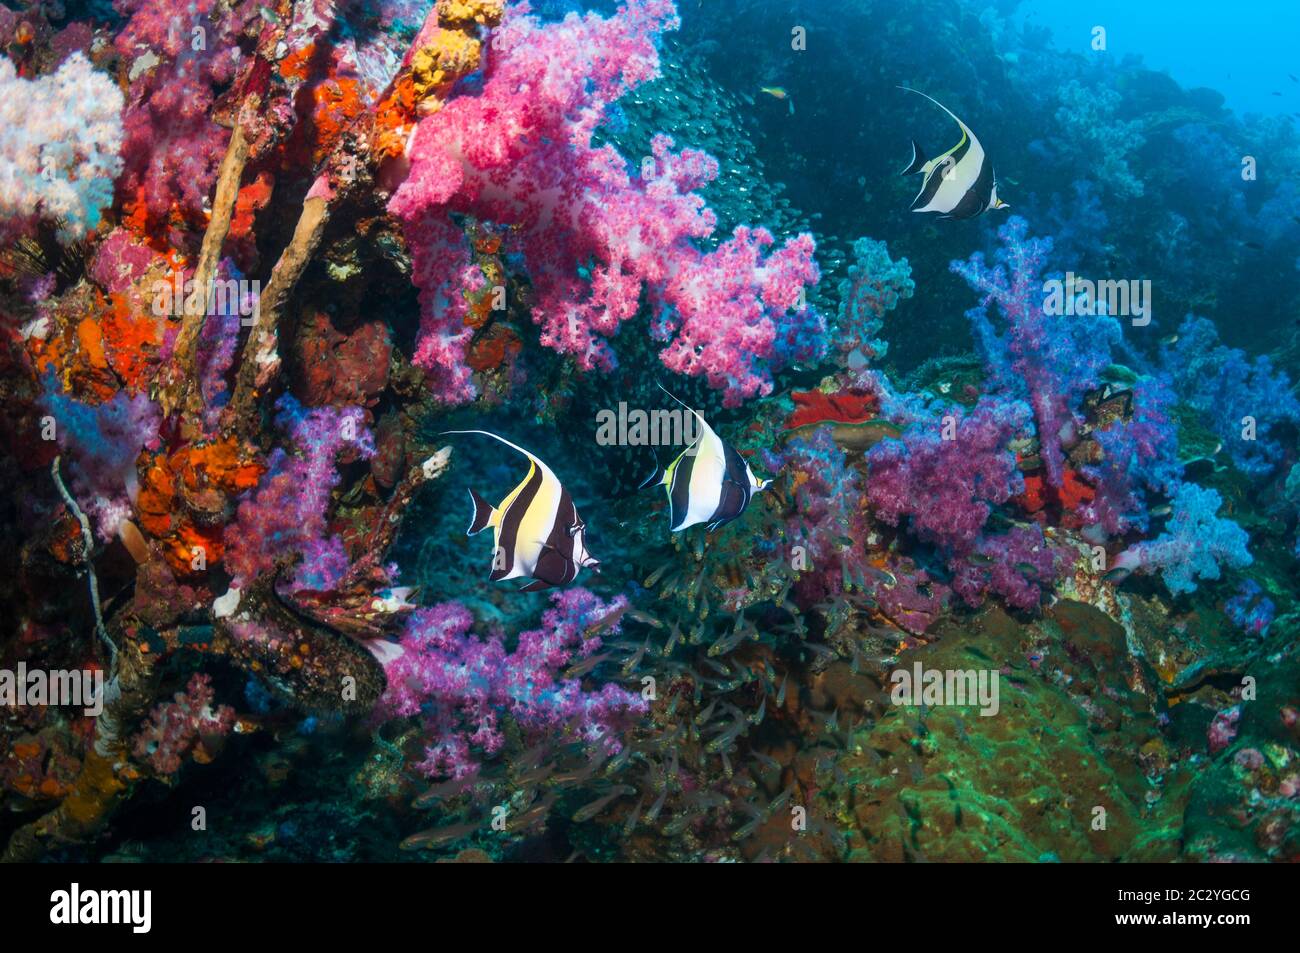 Coral reef scenery with Moorish idols [Zanclus cornutus] and soft corals [Dendronepthya sp.].  Andaman Sea, Thaiand. Stock Photo